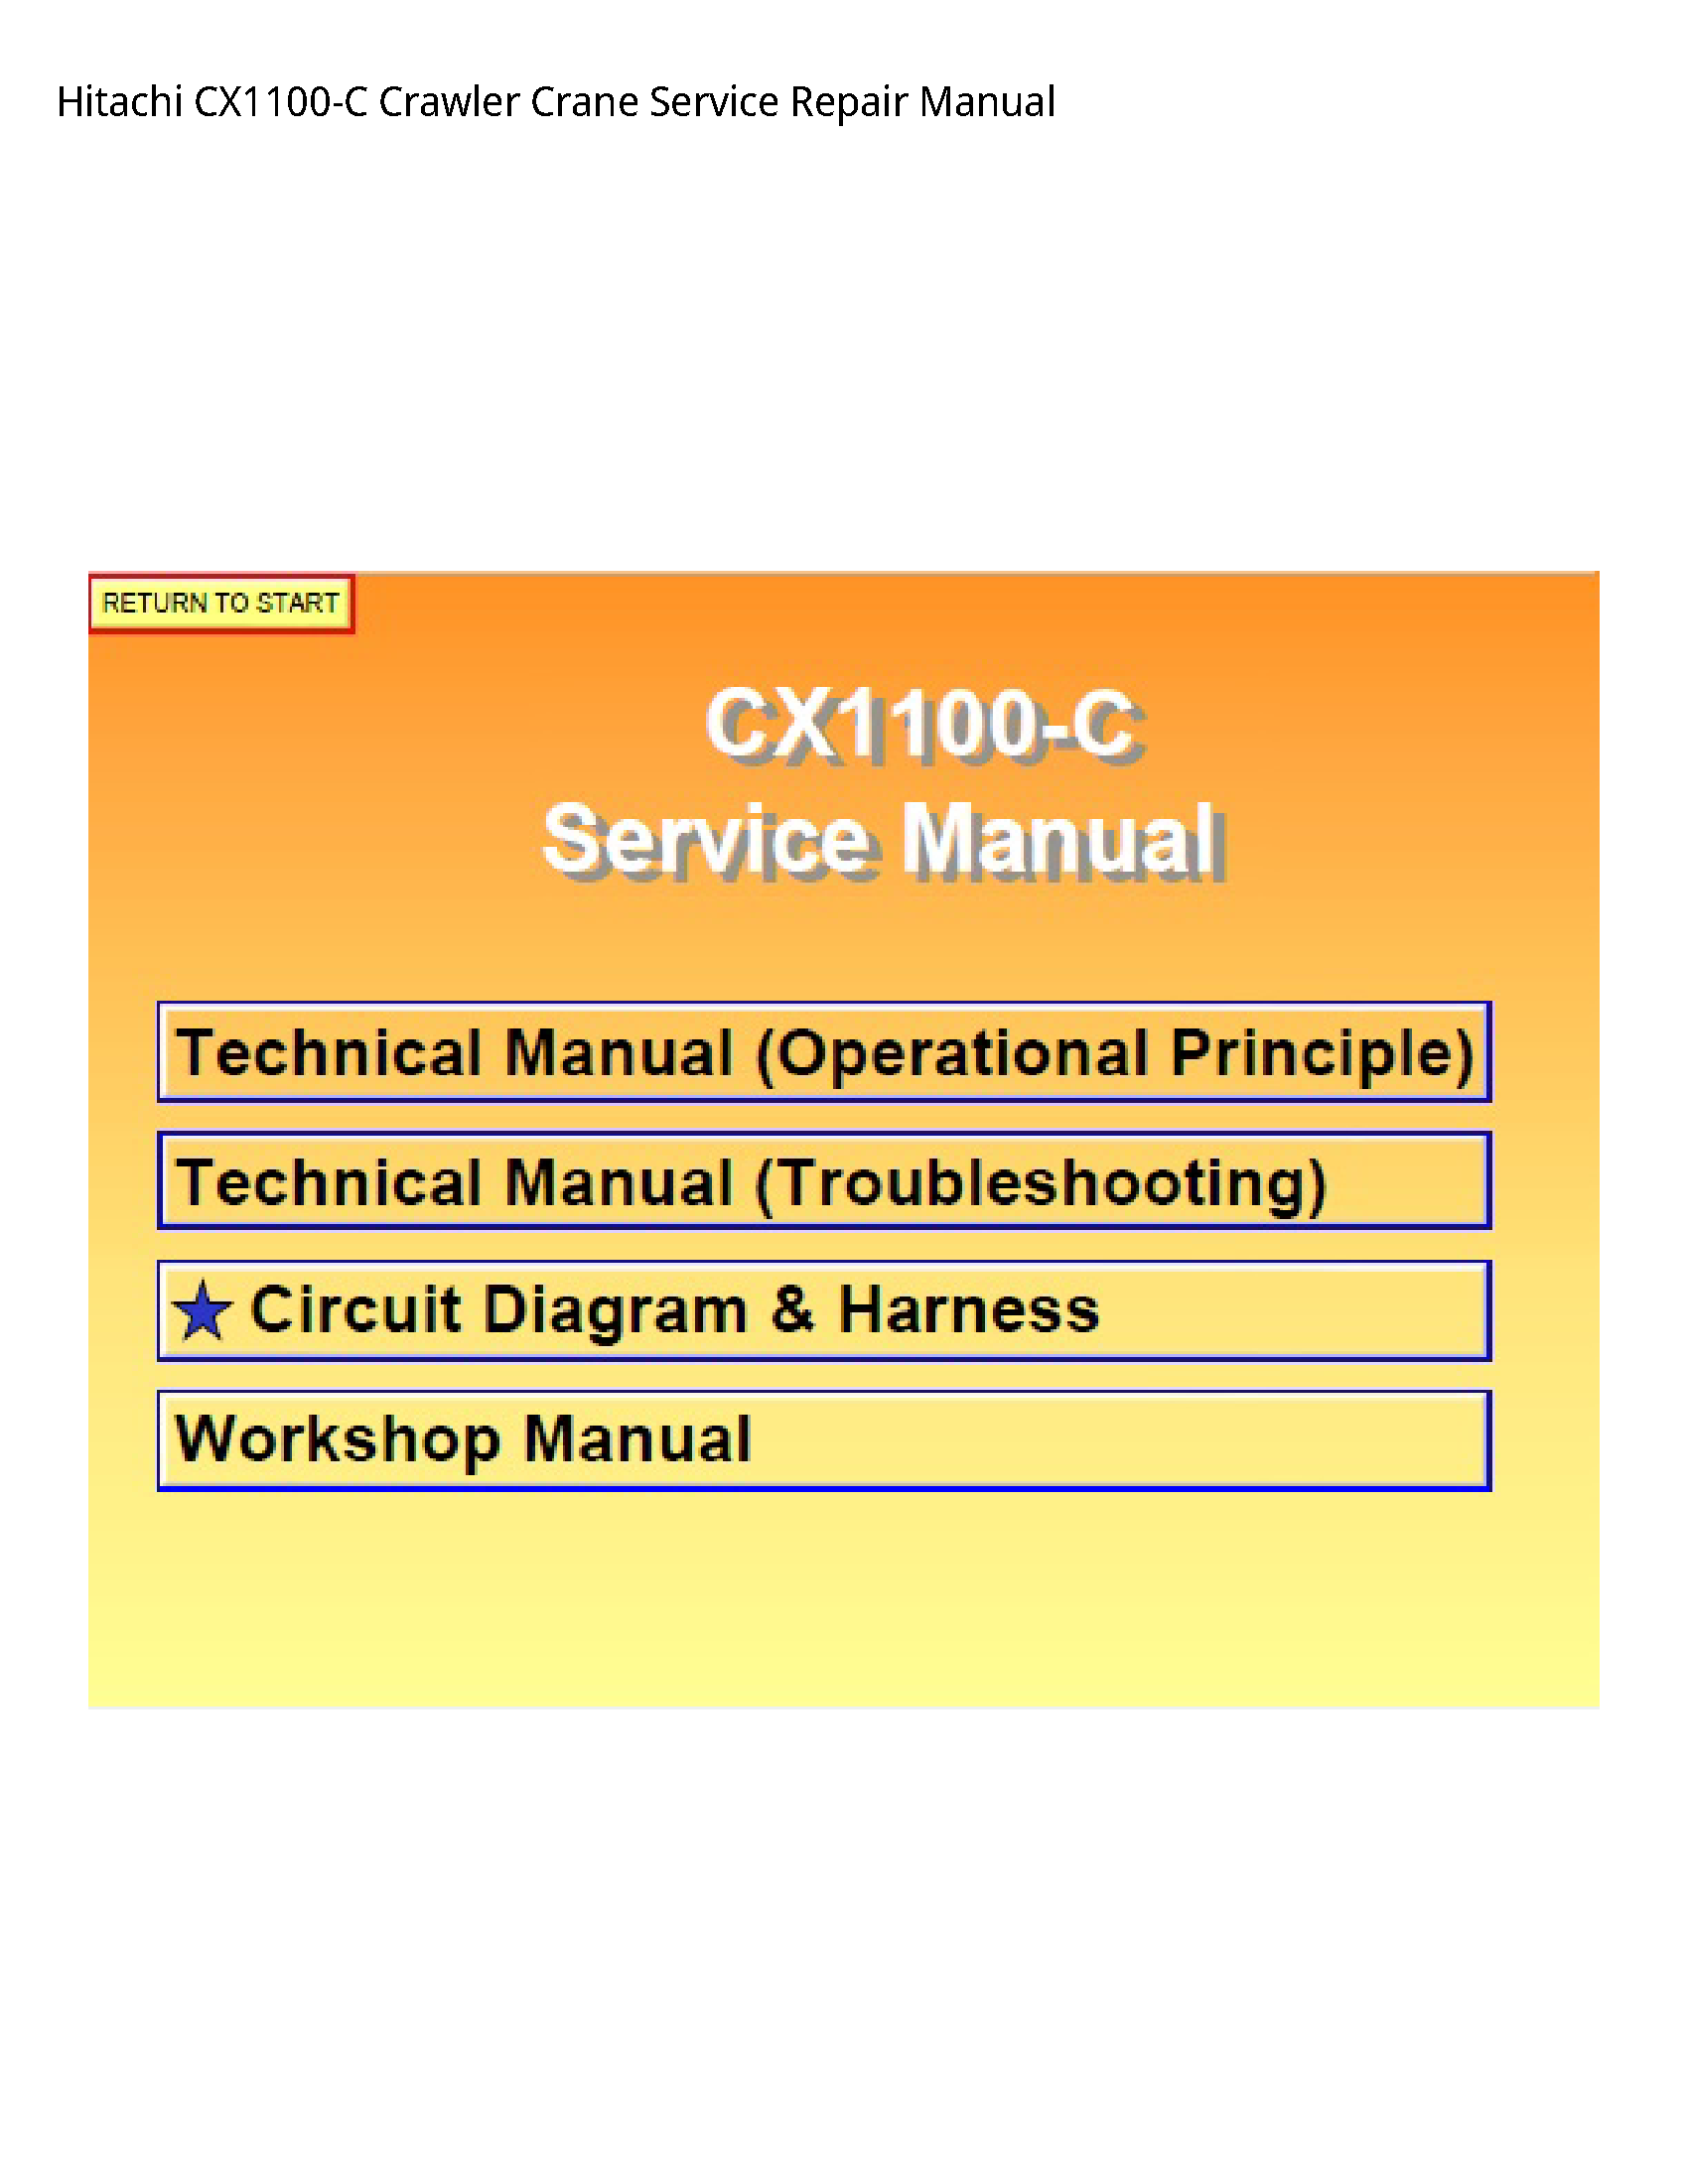 Hitachi CX1100-C Crawler Crane manual